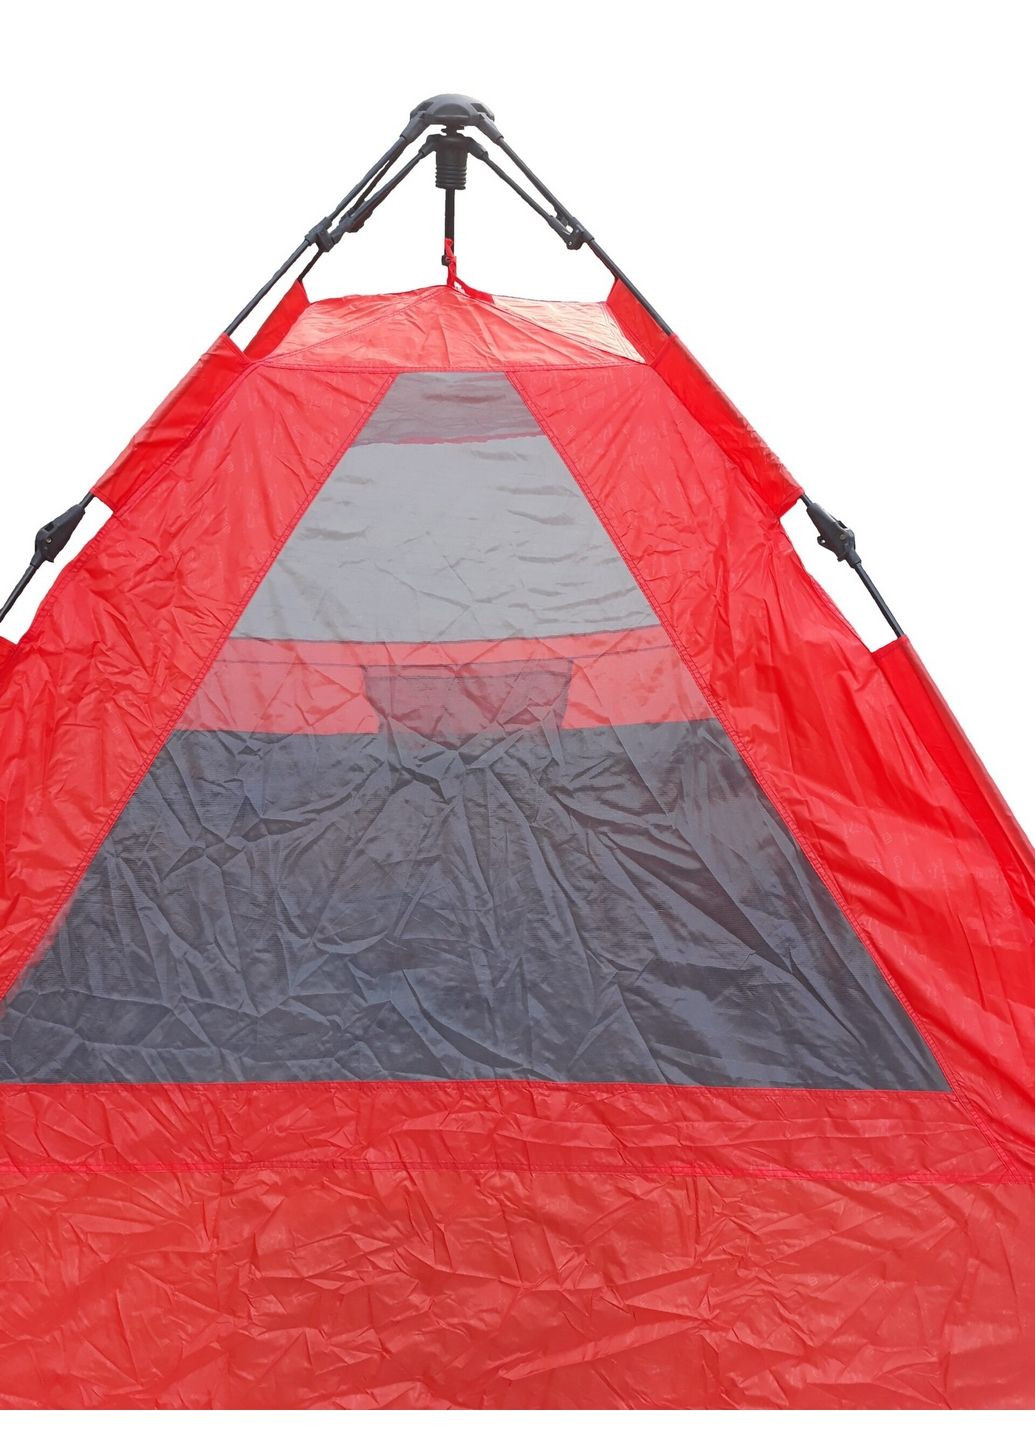 Палатка Mirmir Sleeps 3 No Brand (292578067)